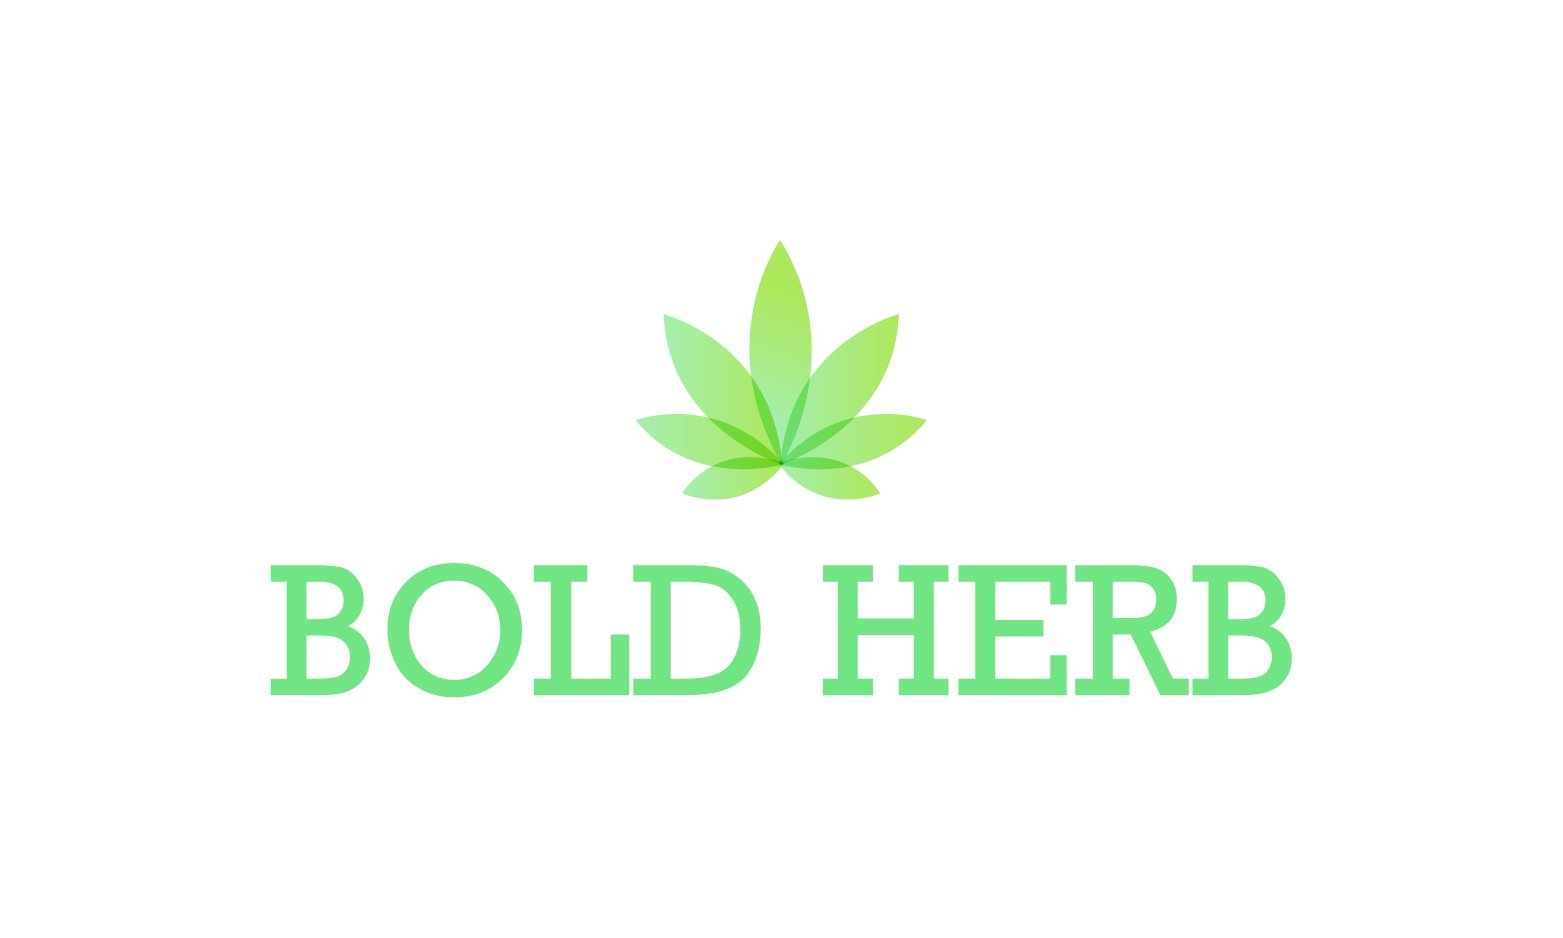 BoldHerb.com - Creative brandable domain for sale